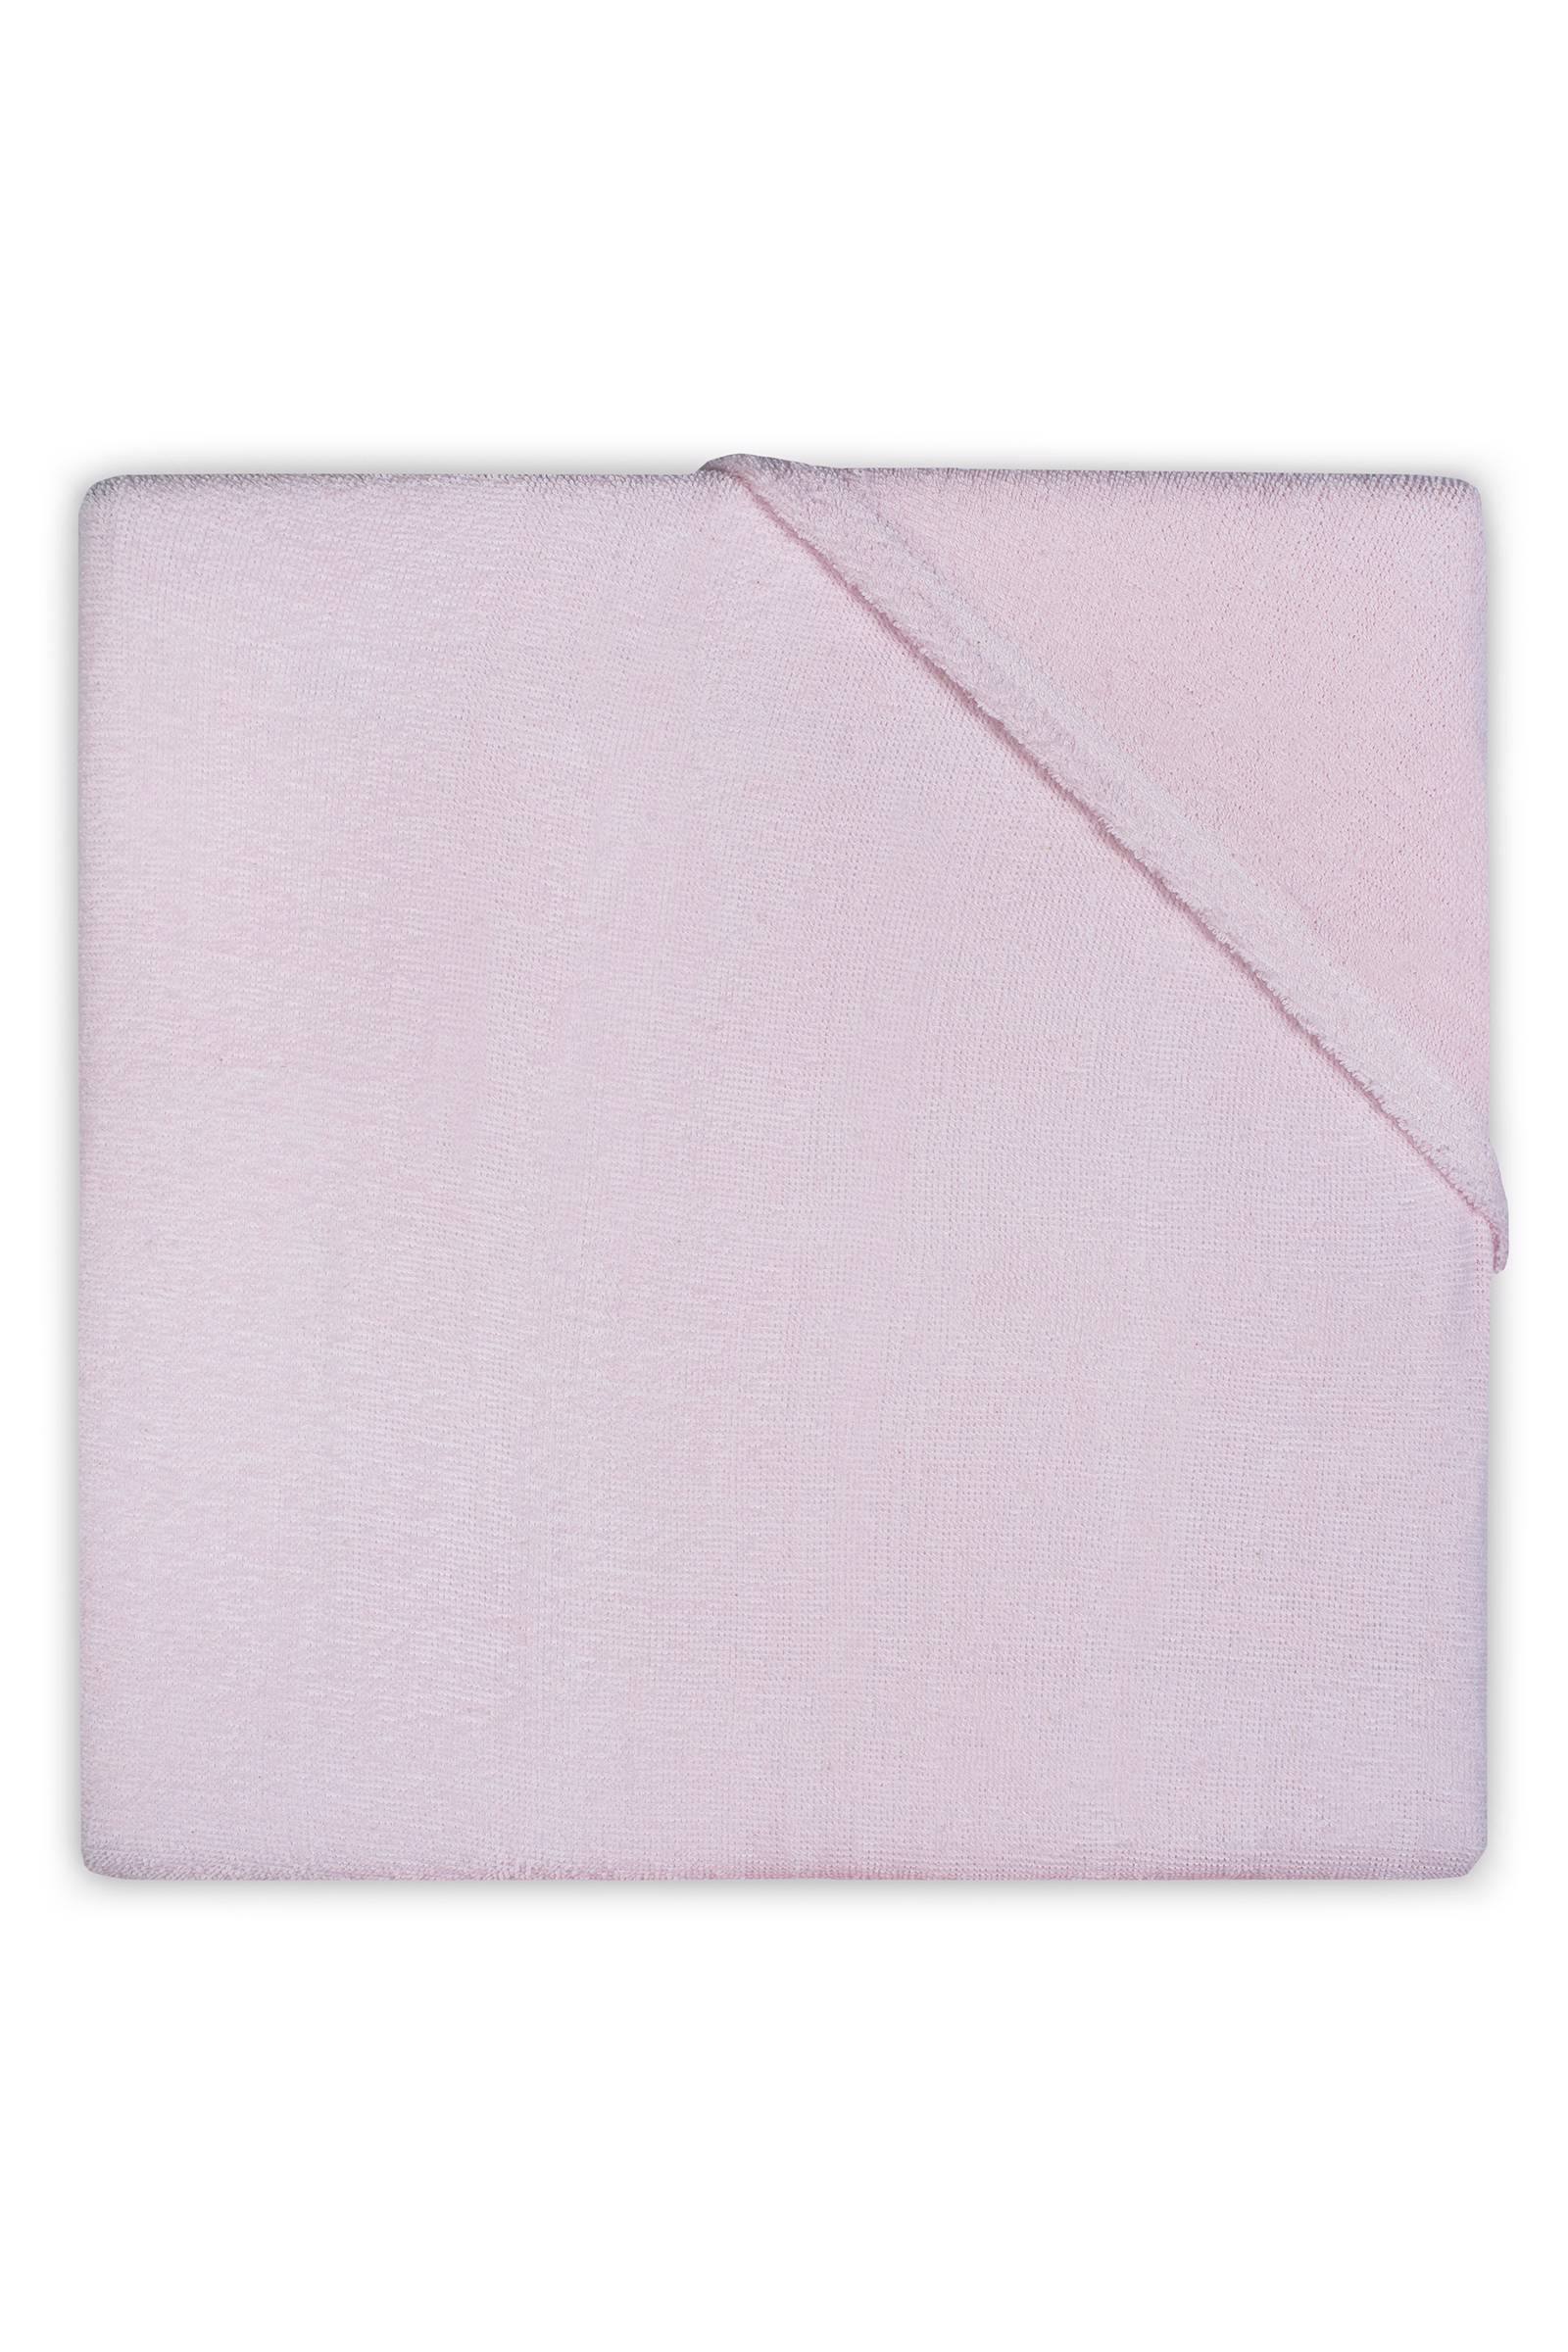 Jollein  Hoeslaken Frottee 60x120 cm lichtroze Roze/lichtroze Gr.60x120 cm online kopen